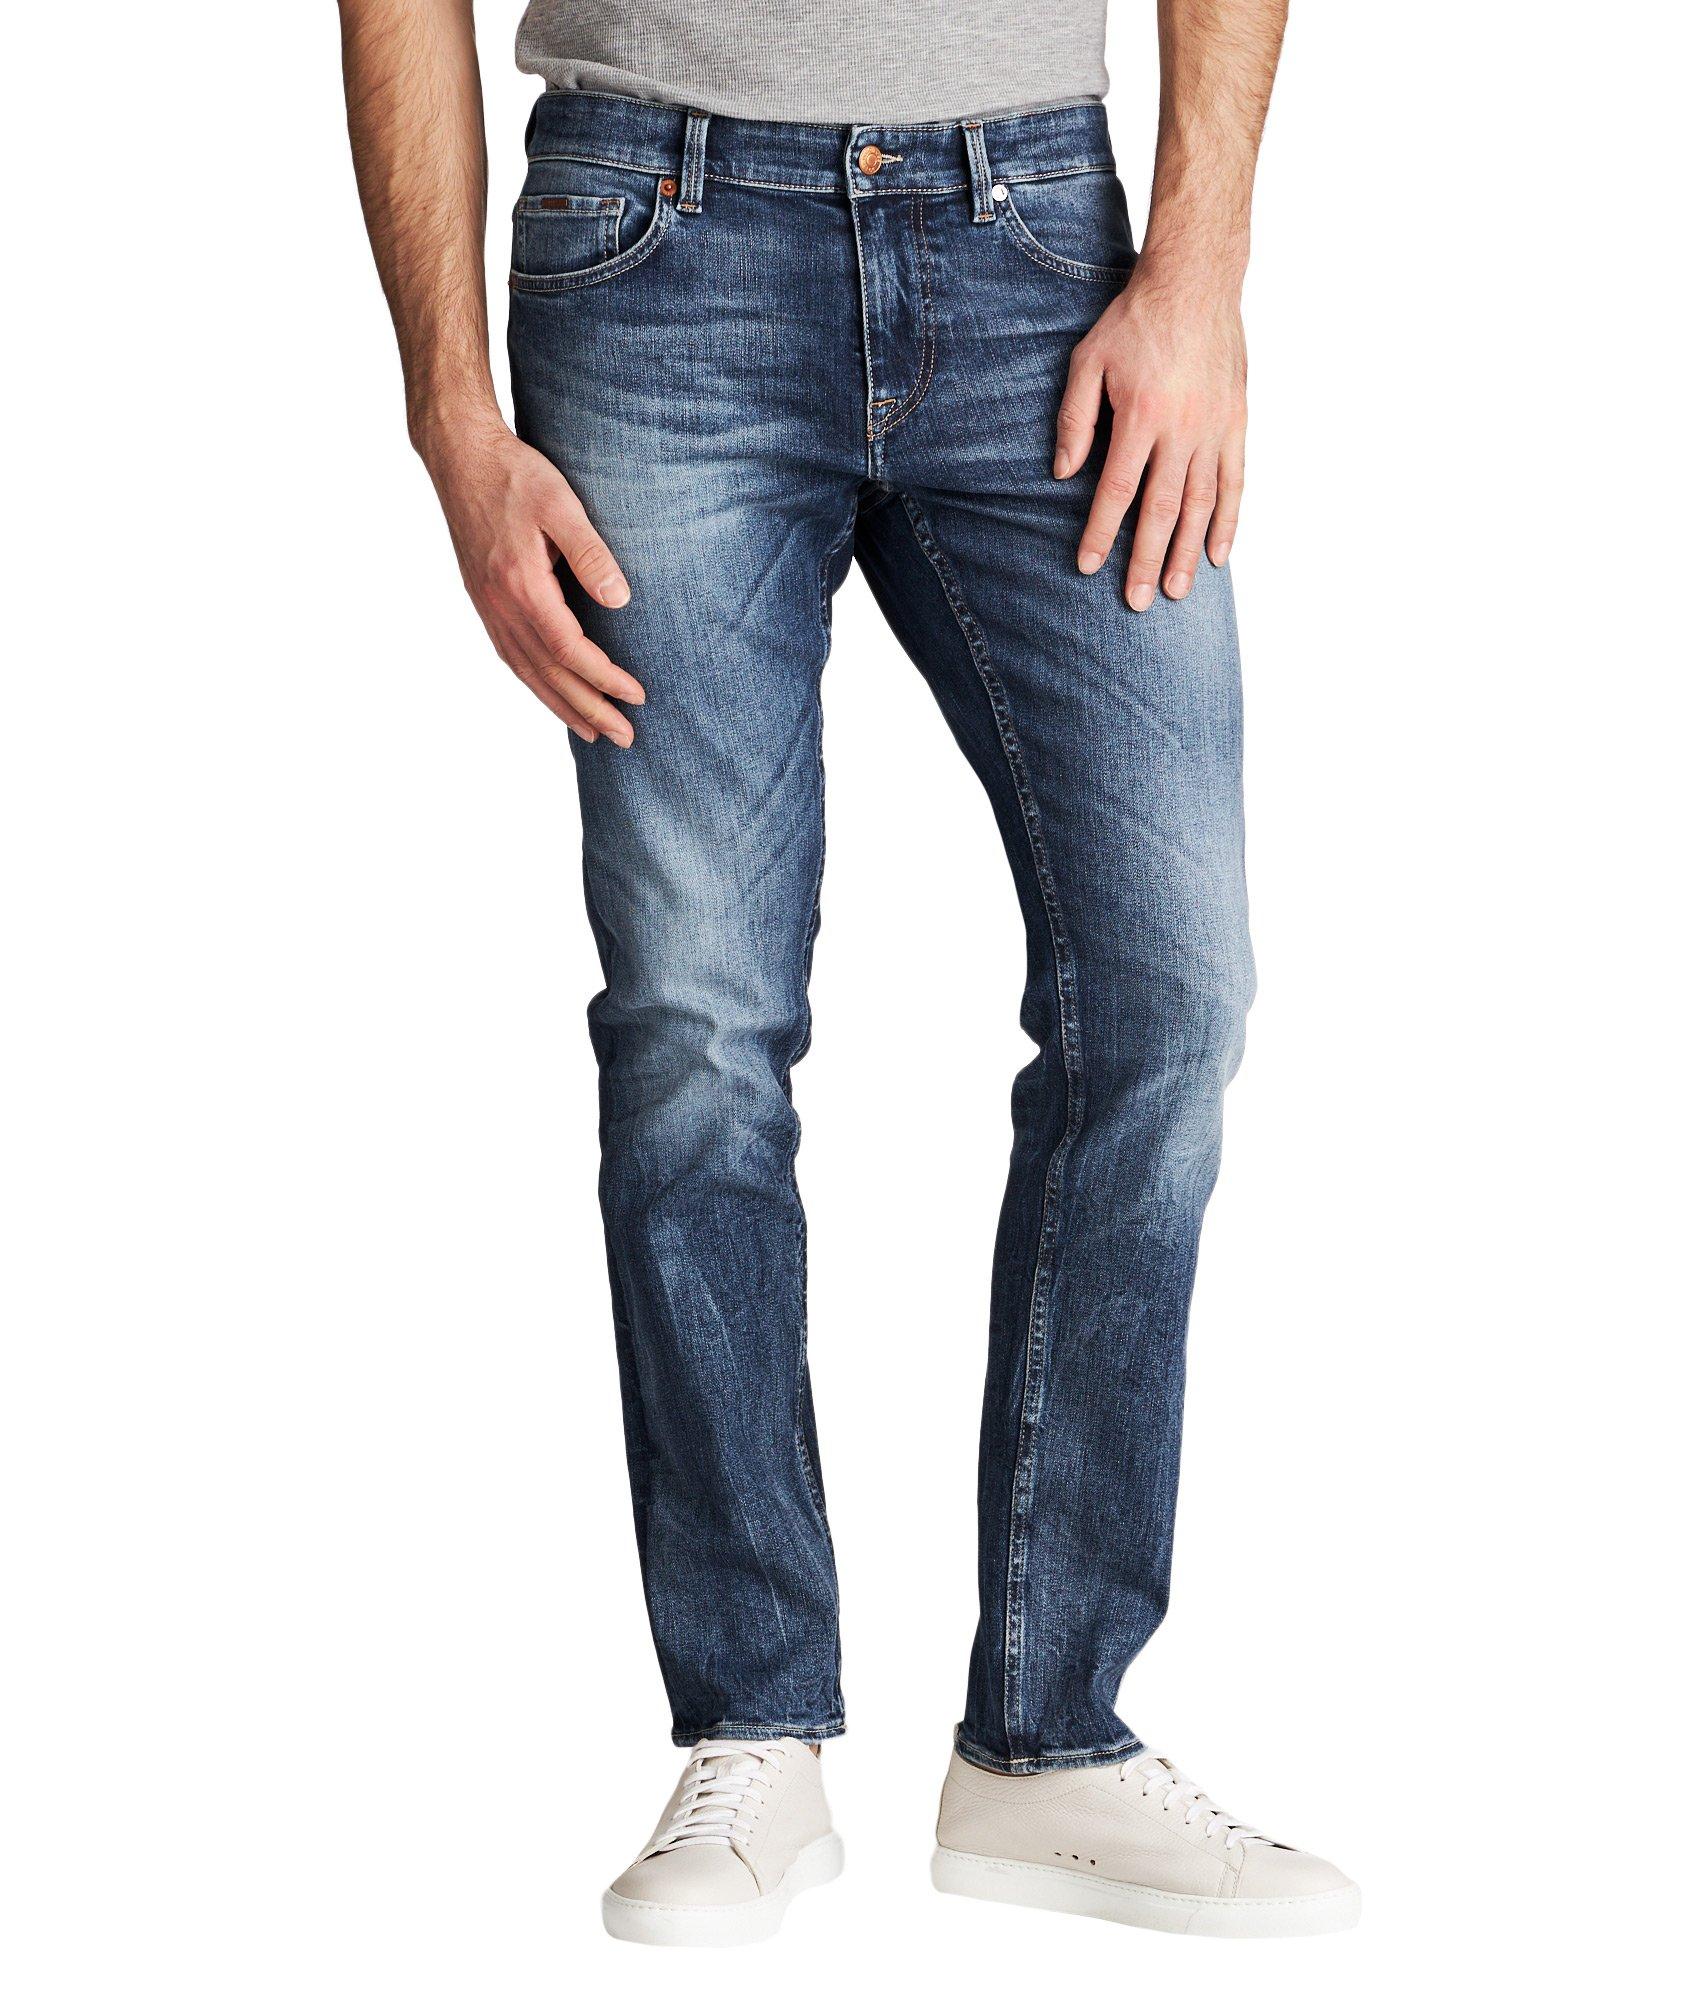 Charleston Extra-Slim Fit Jeans image 0